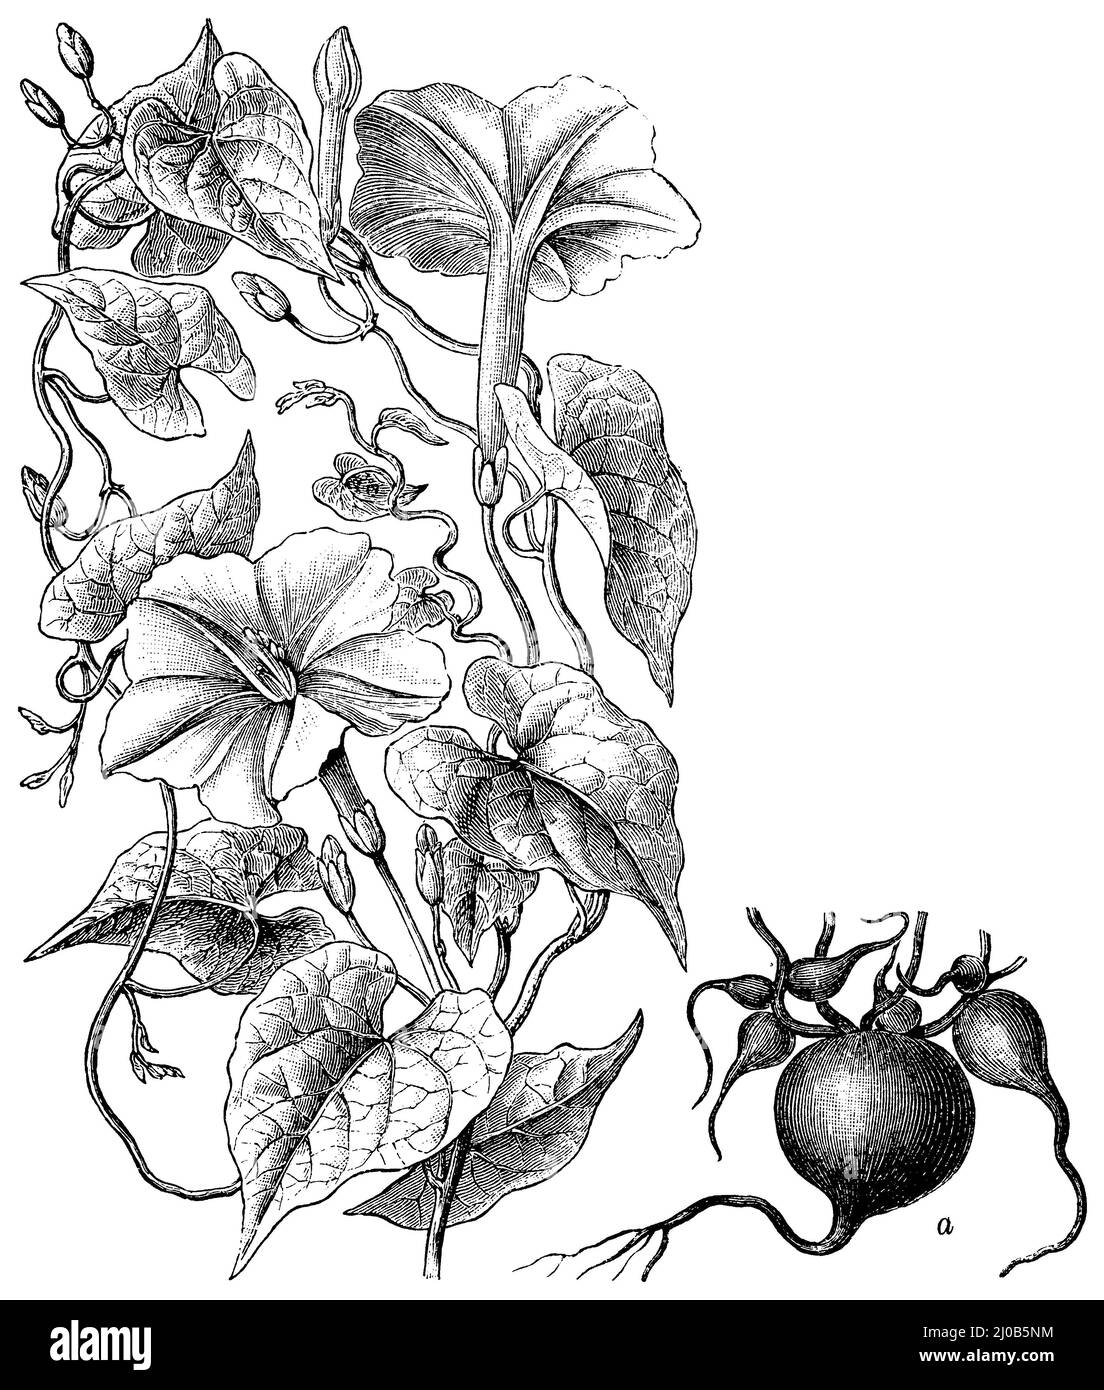 jalap, a tuber, Ipomoea purga,  (, ), Jalape, a Knolle, Ipomoea purga, a tubercule Stock Photo